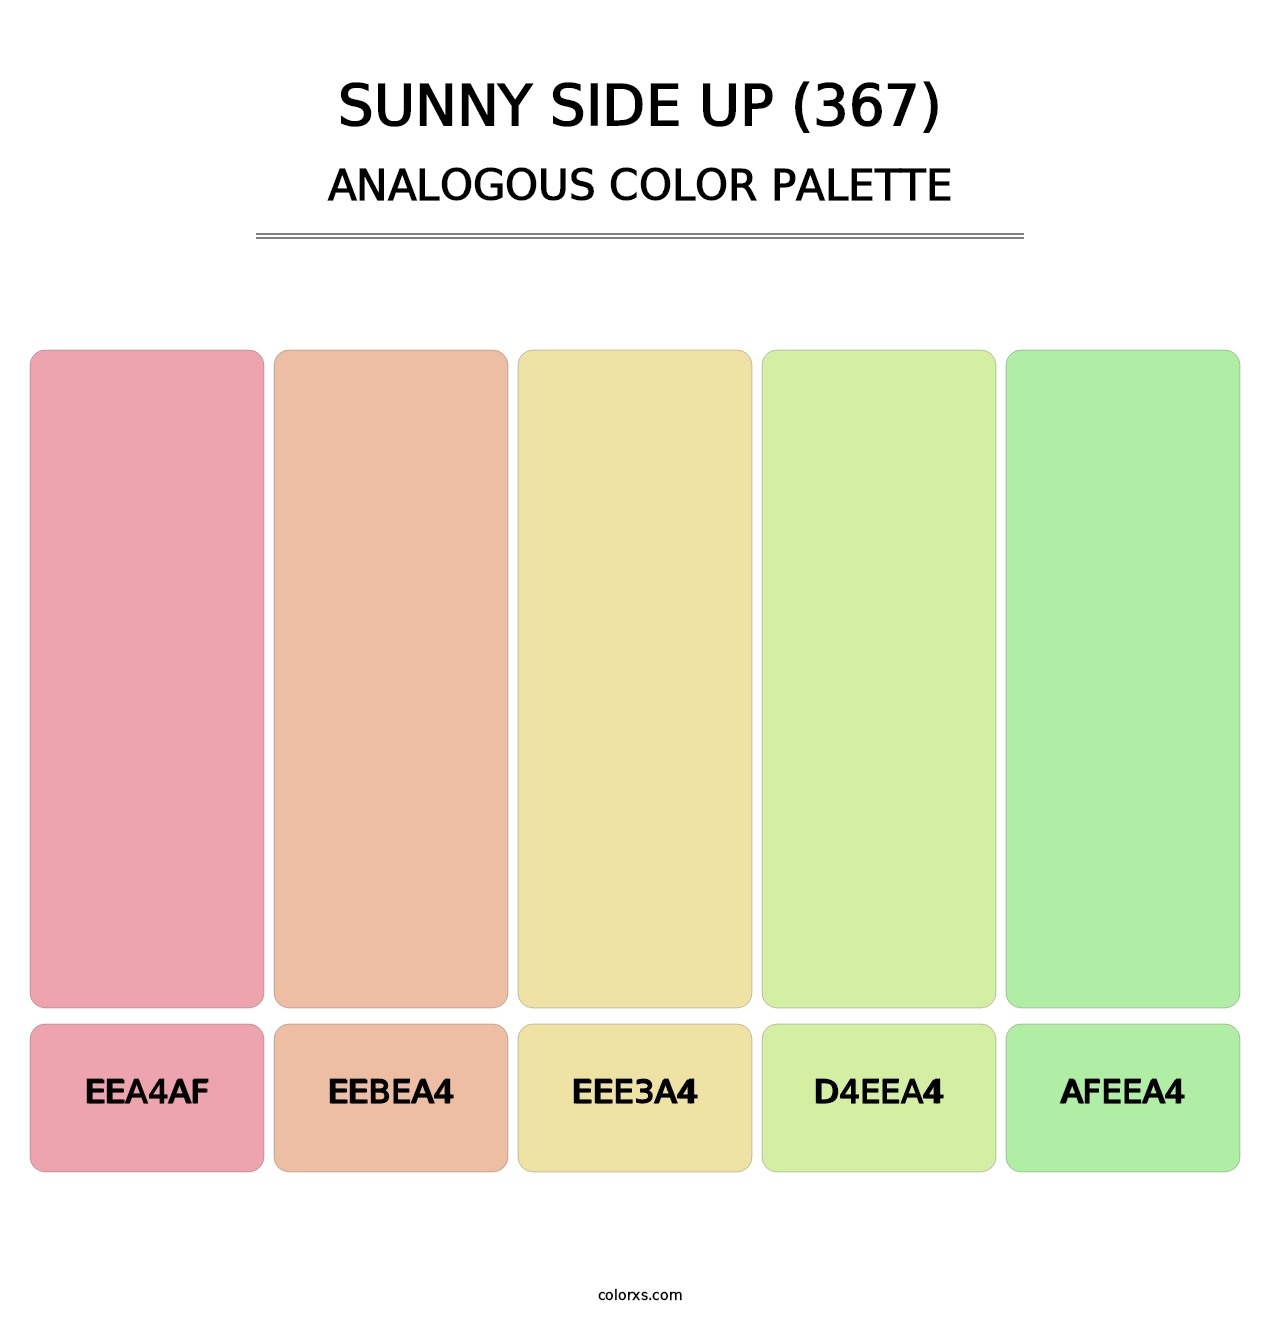 Sunny Side Up (367) - Analogous Color Palette